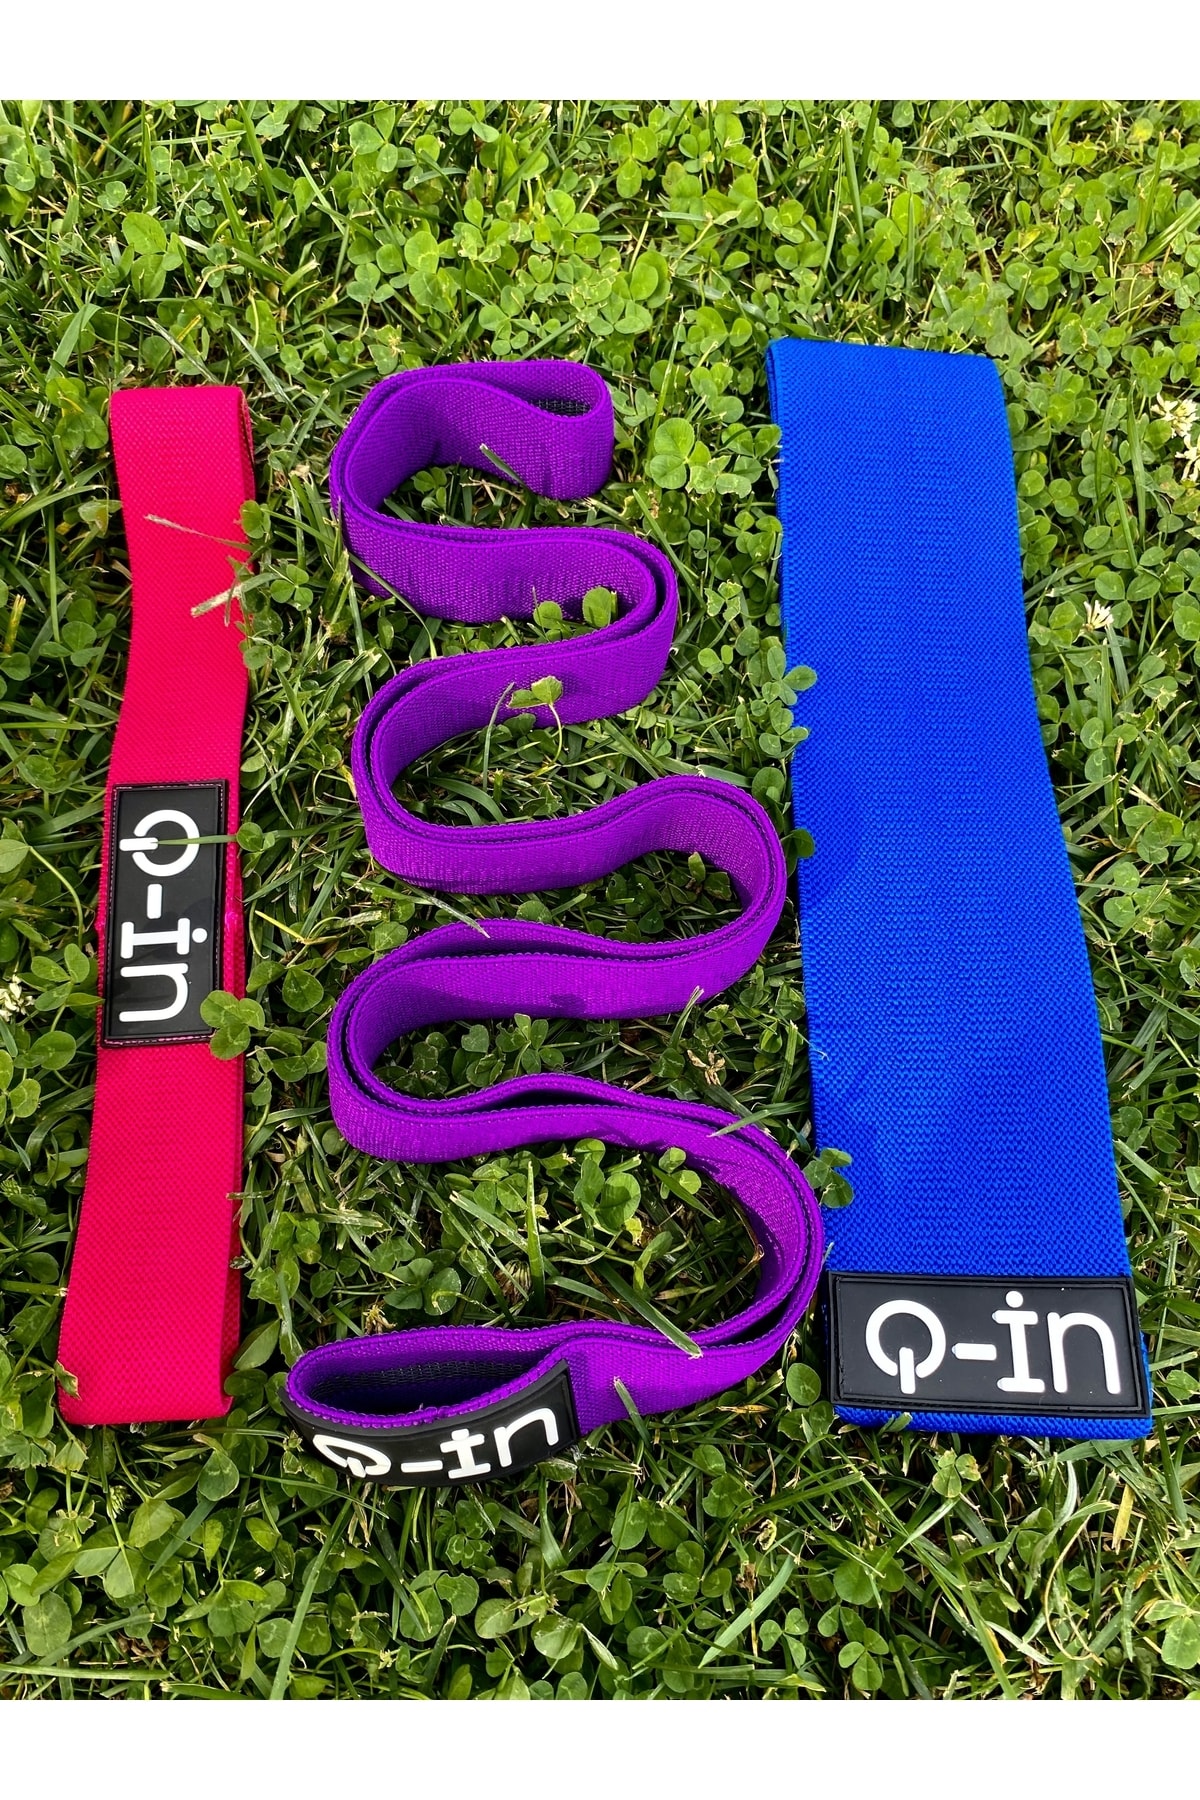 Q-İN 3’lü Set (mini / Loop / Squat) Direnç Lastiği, Pilates Bandı